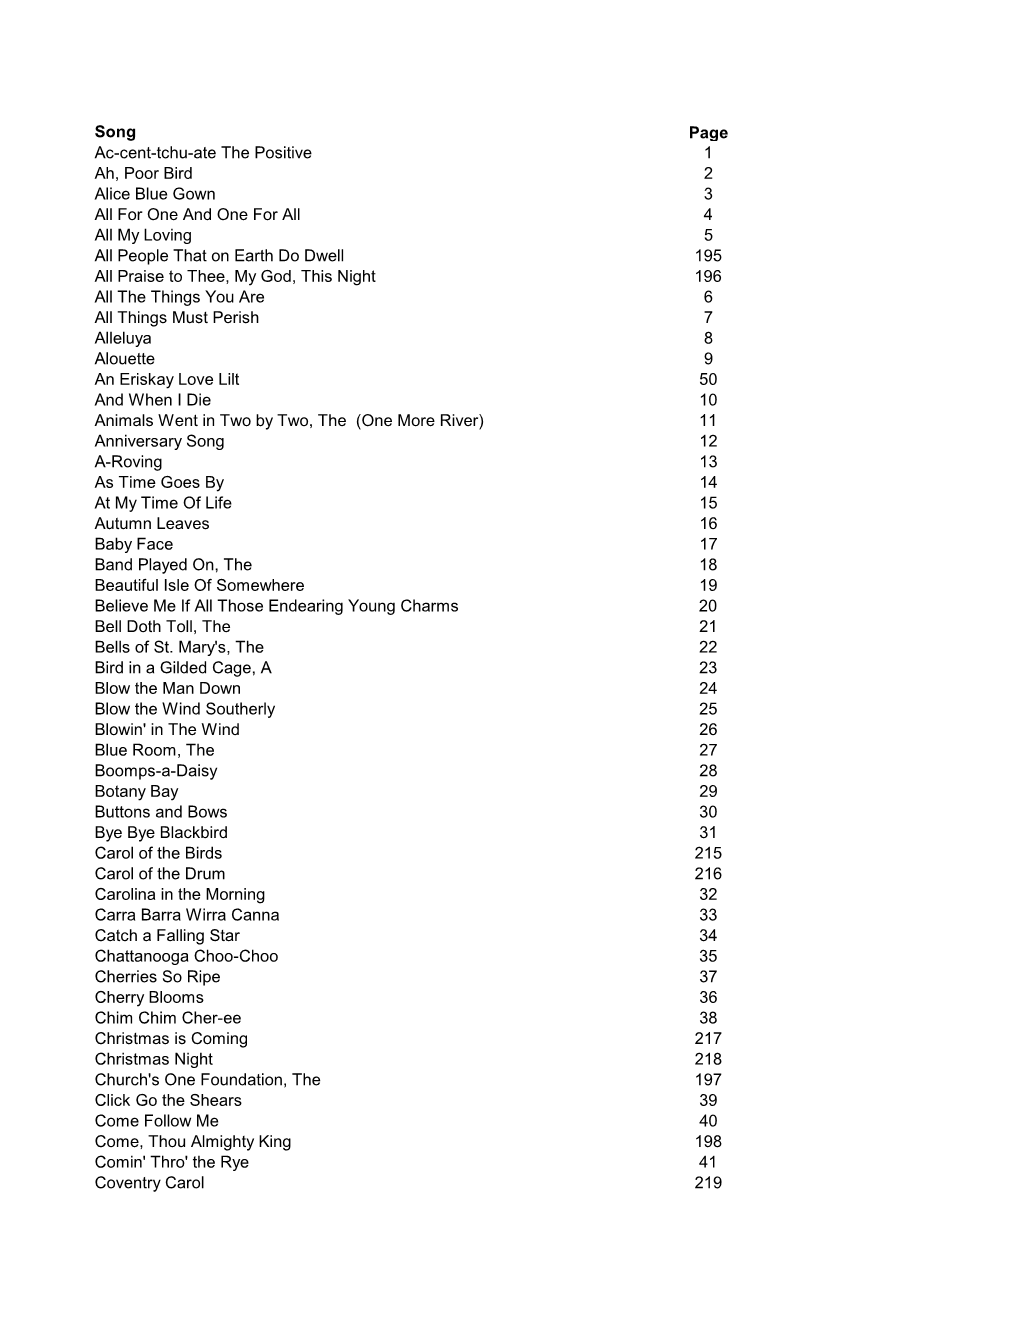 Large Print Songbook Index